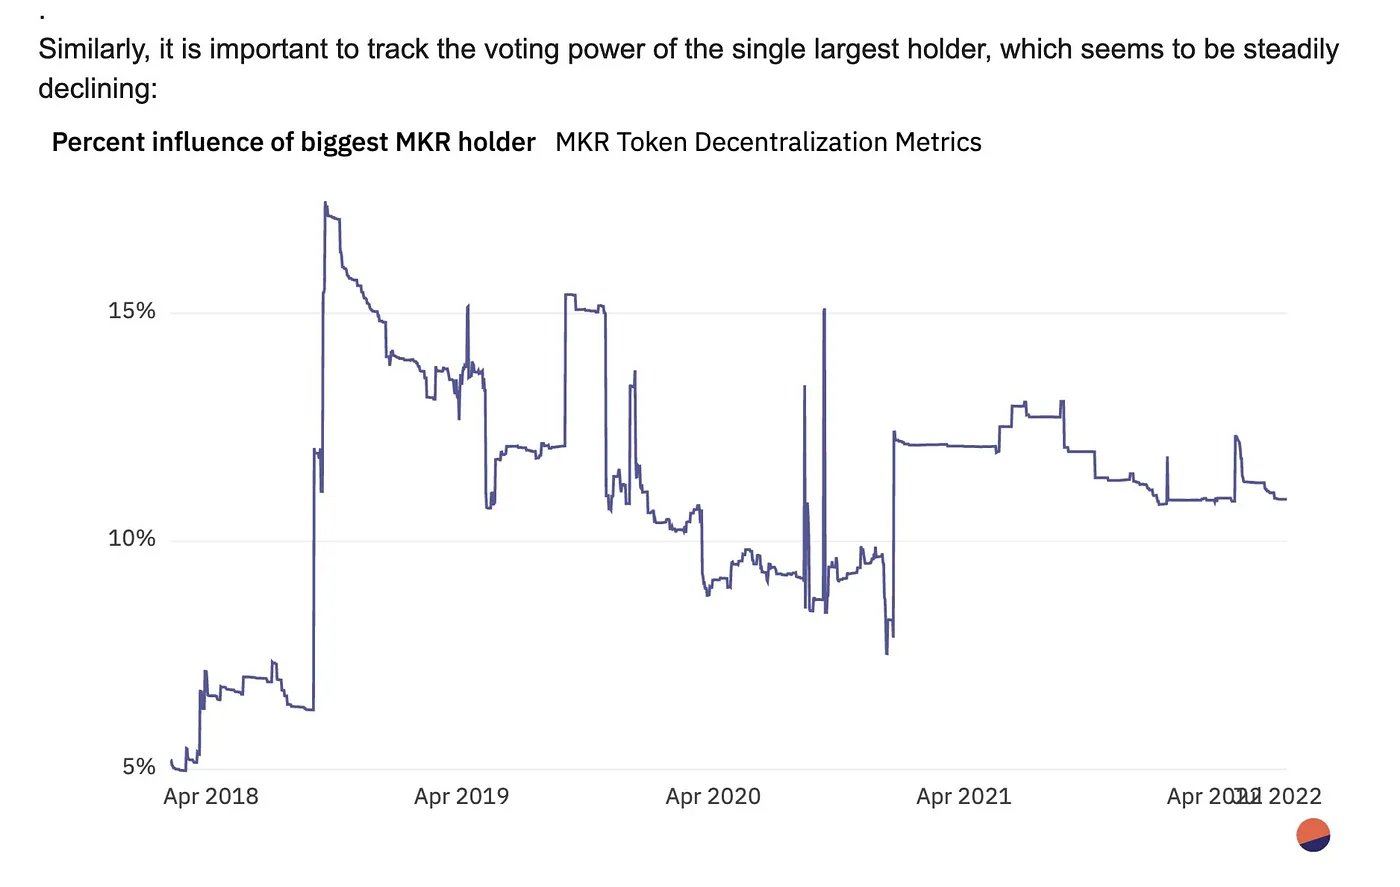 Descentralización de token MKR: https://forum.makerdao.com/t/mkr-token-decentralization-views/16617